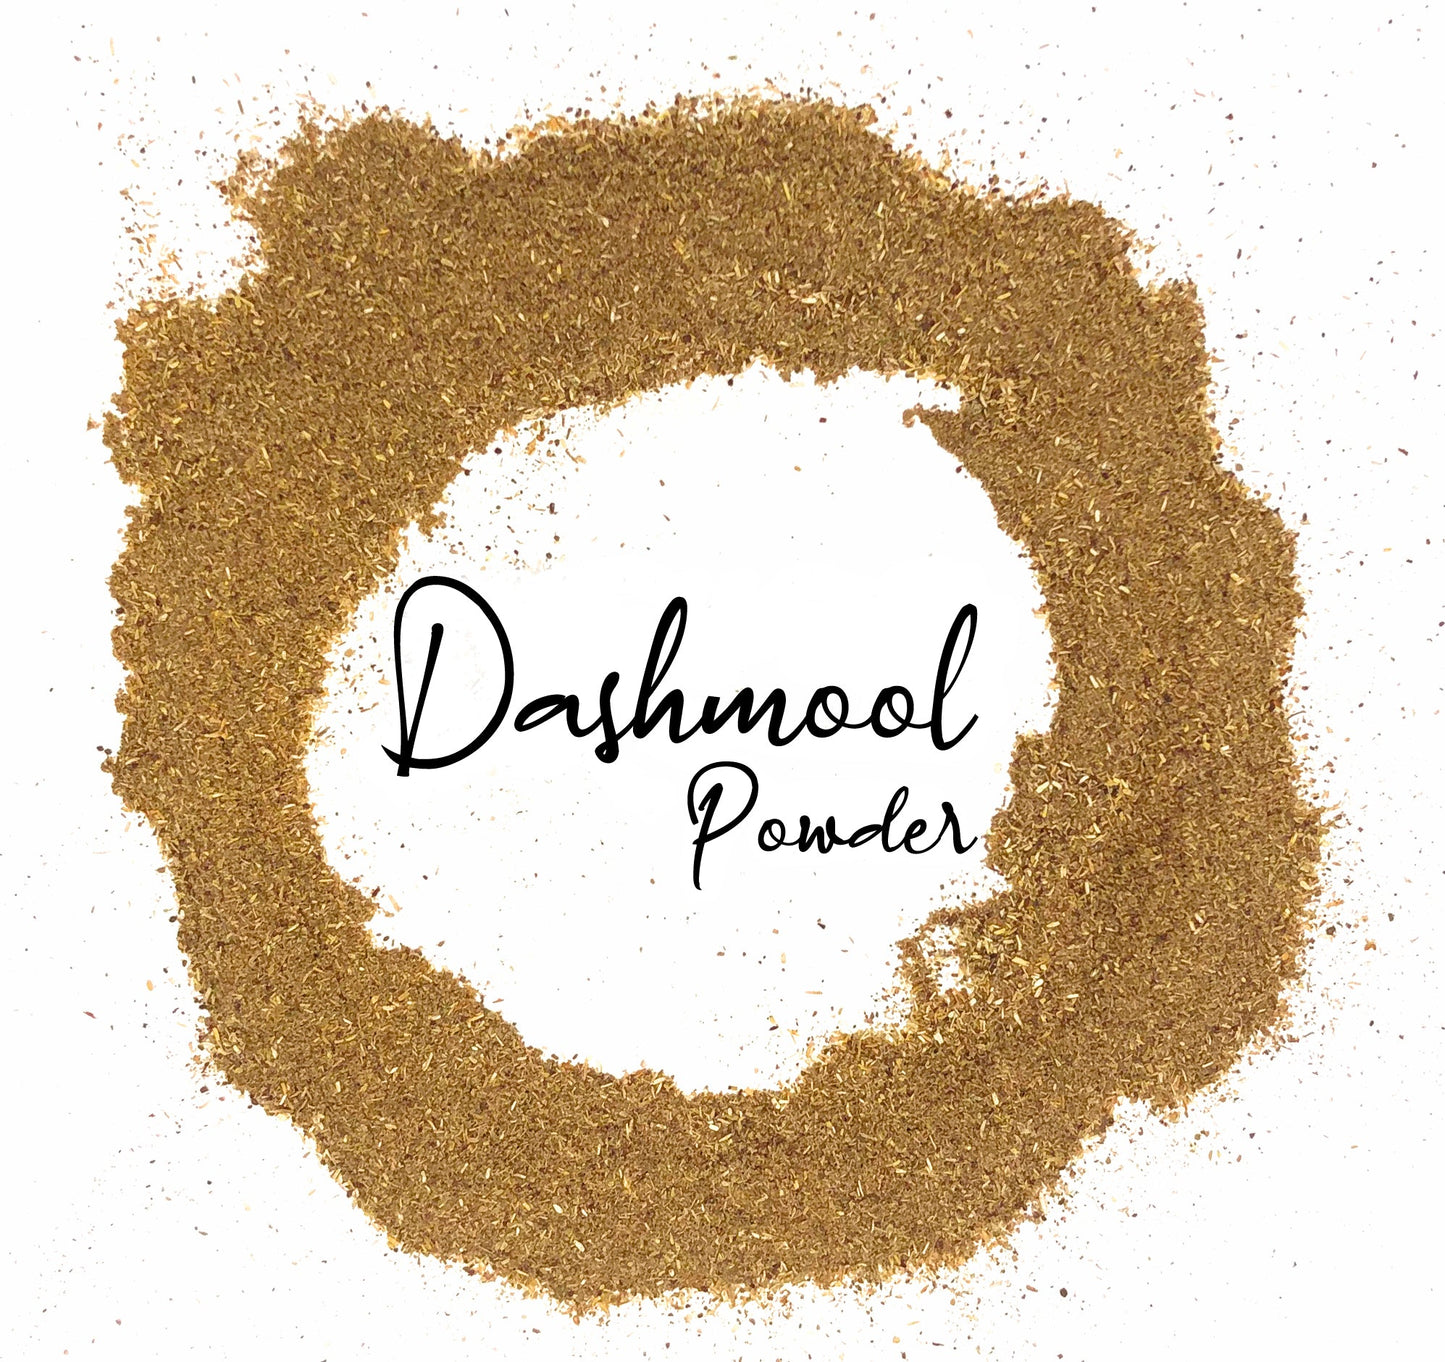 Wholesale Spices & Herbs - Dashmool Powder, Organic 2.8oz(81.5g) Jar